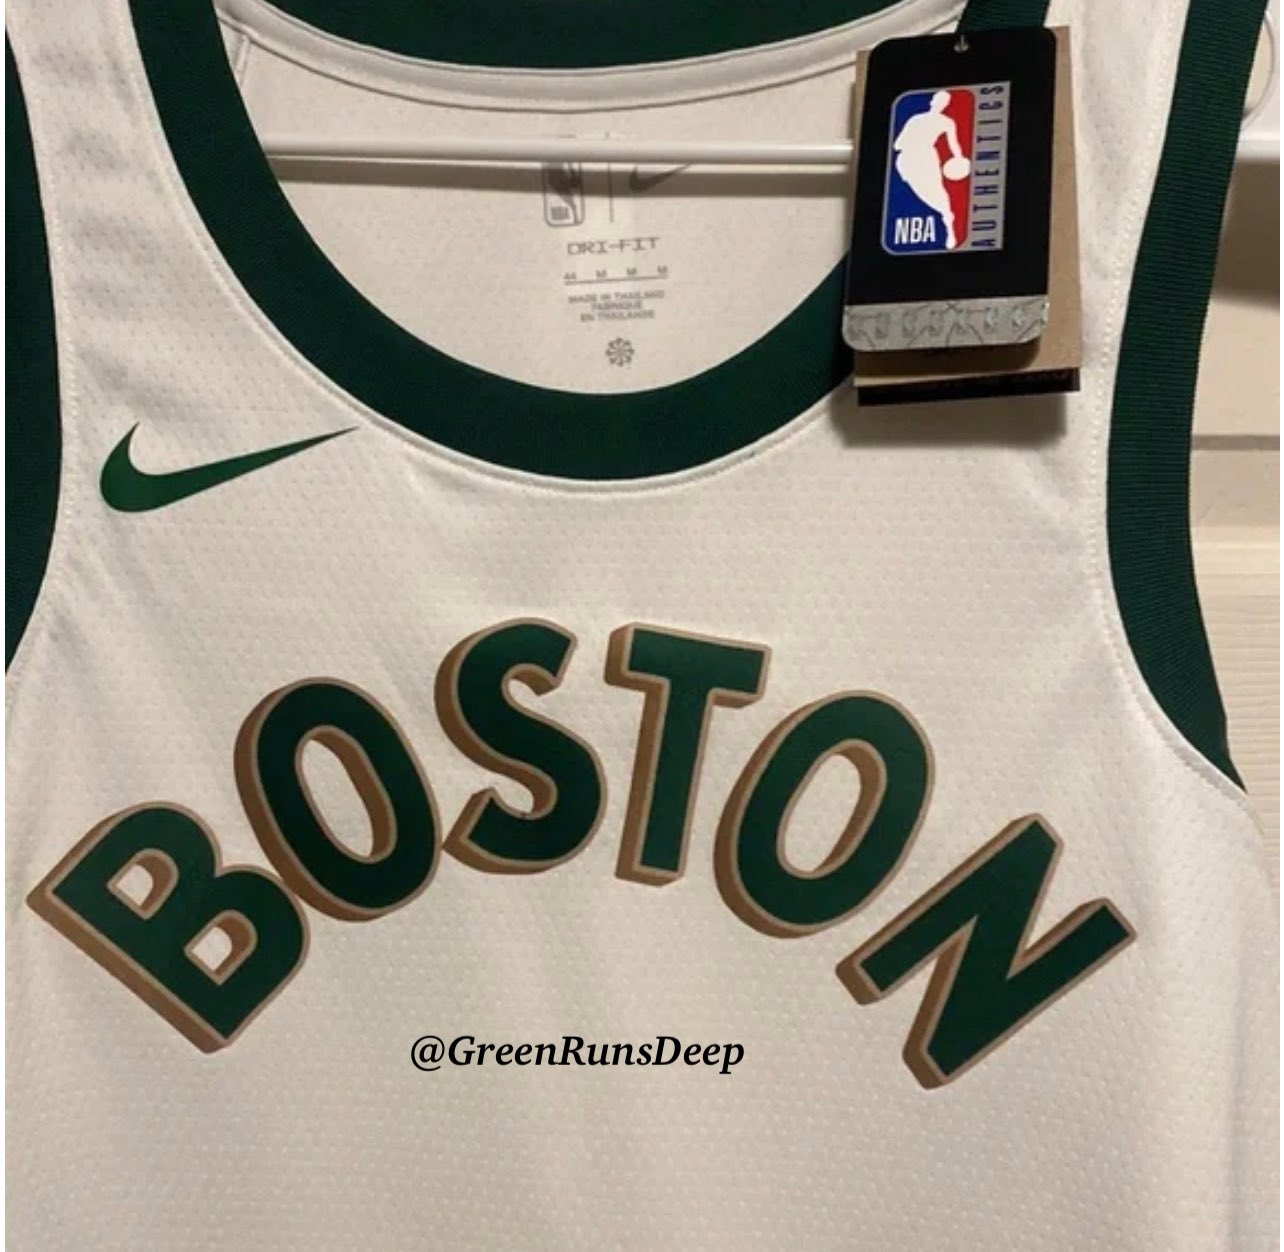 Did the Boston Celtics City Edition jerseys just leak? 